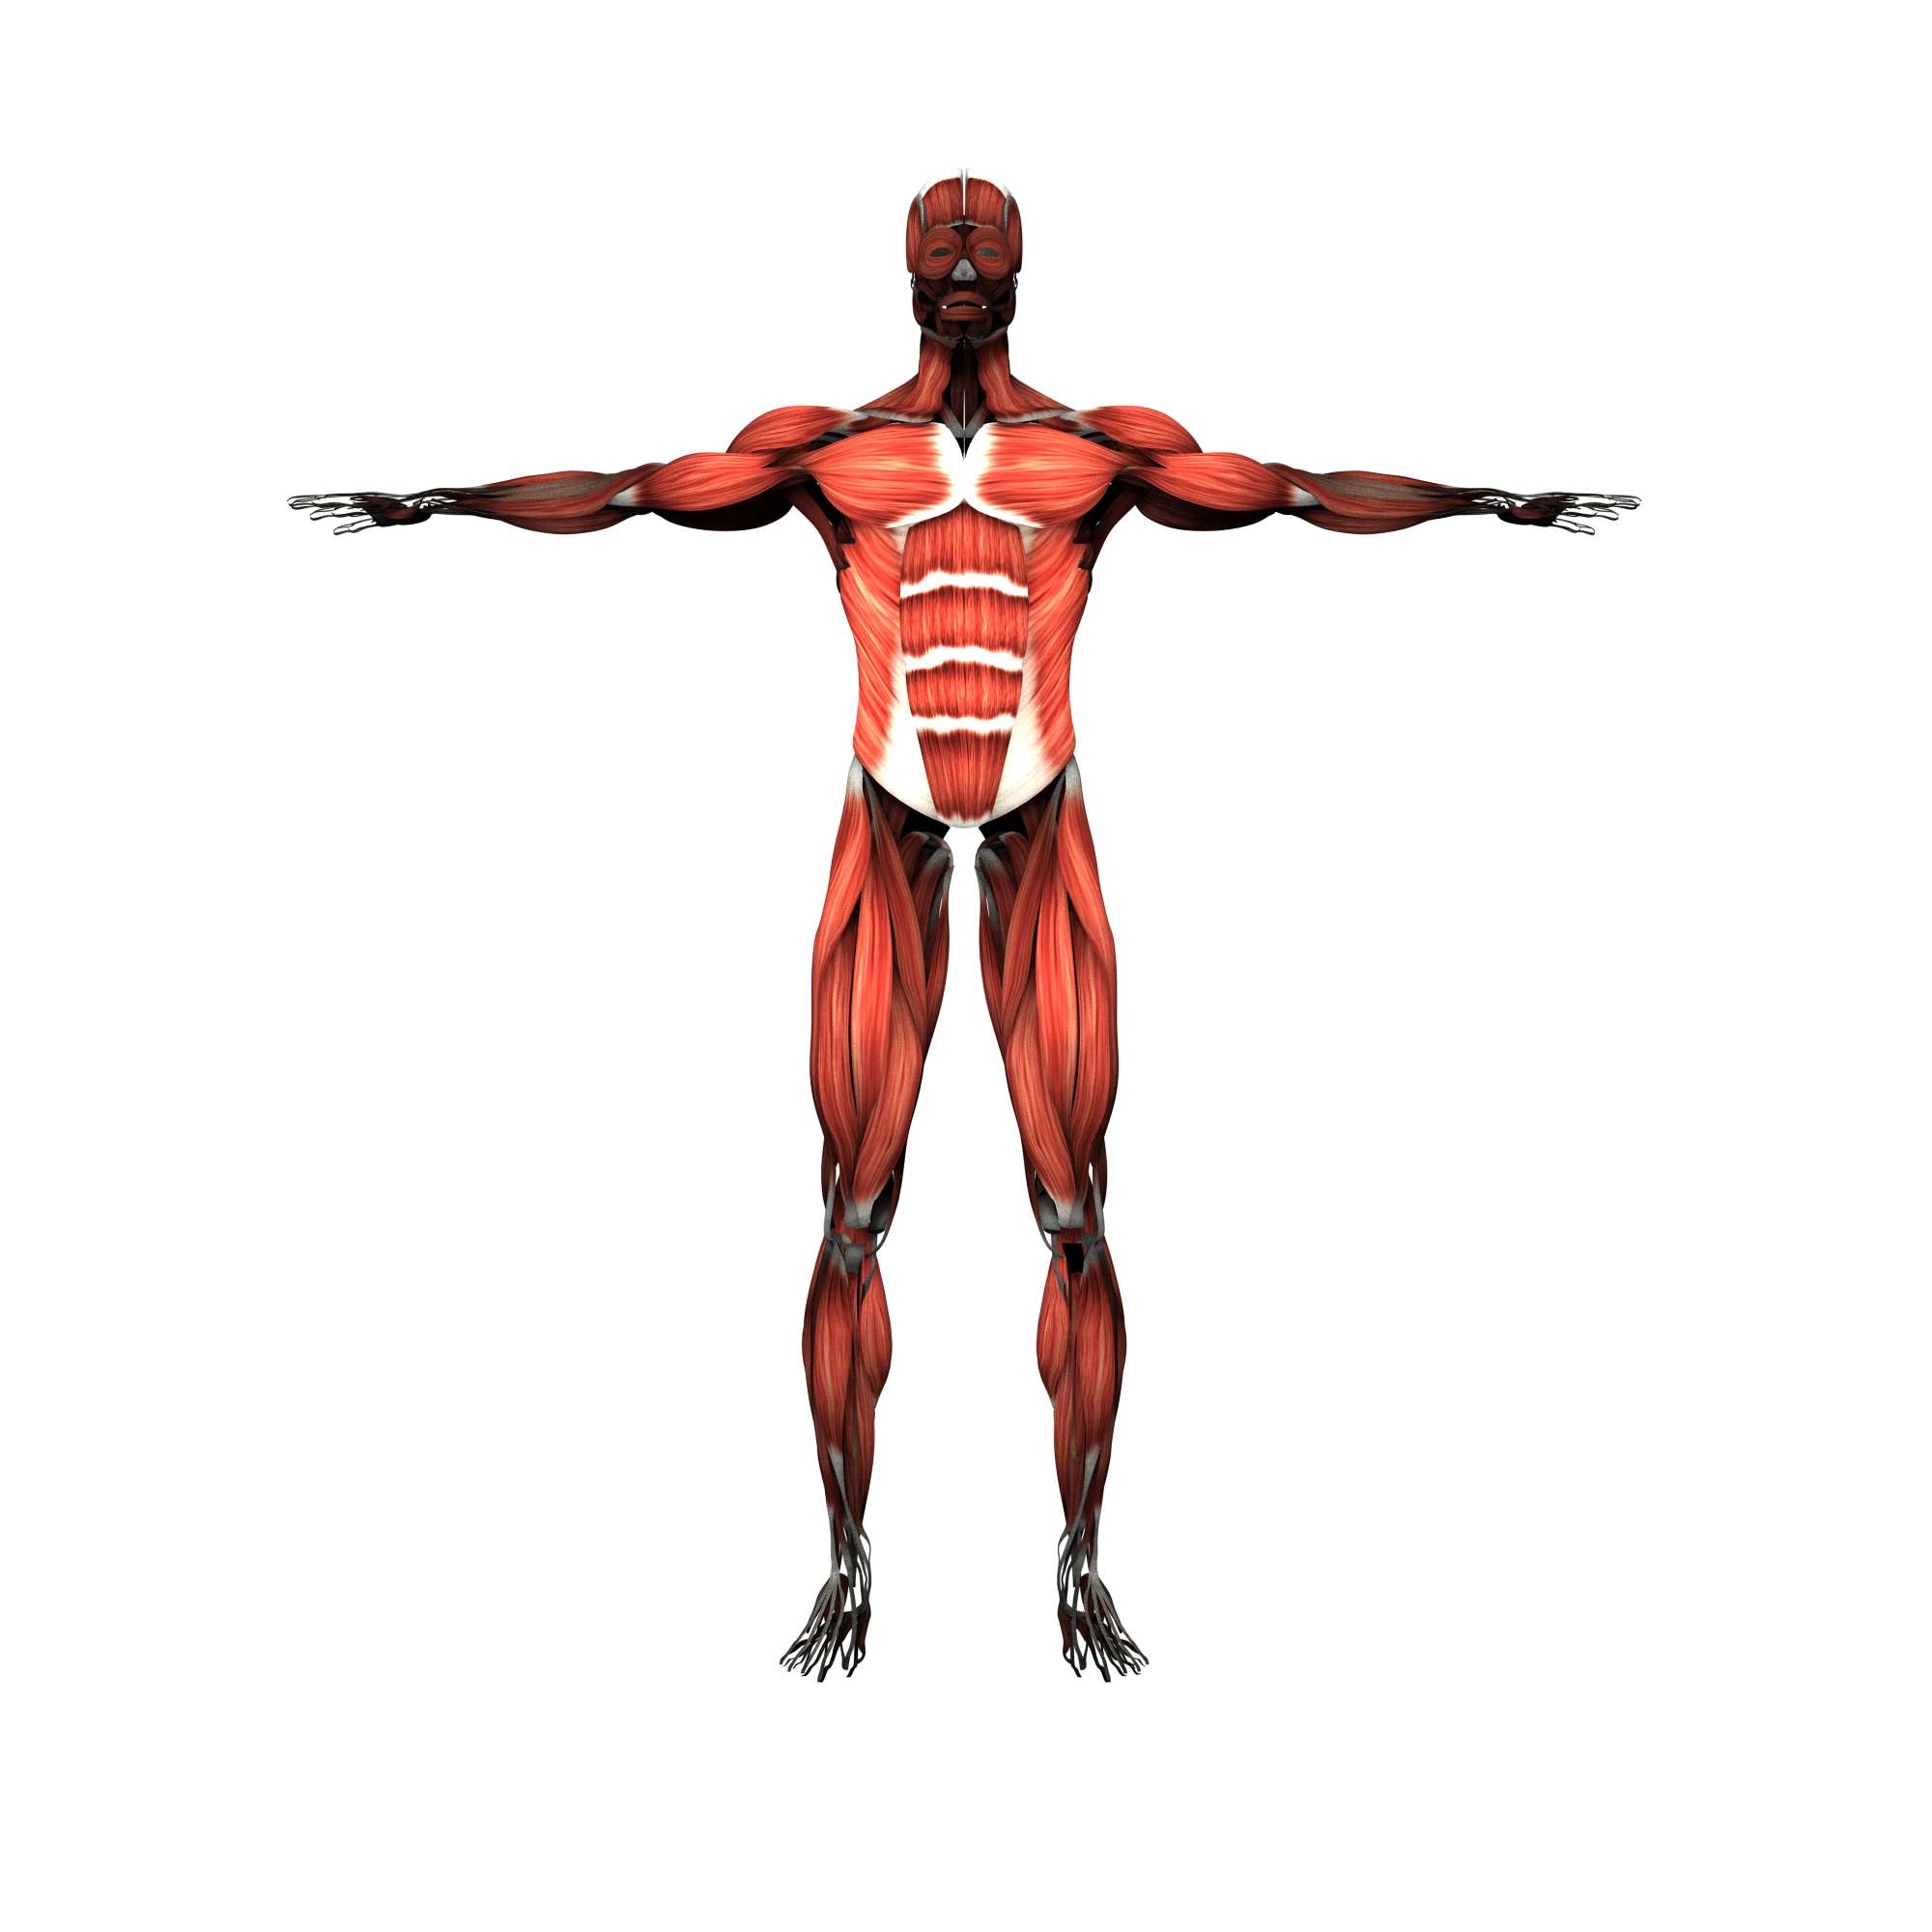 Мышцы картинка. Мышечная система. Мышцы без фона. Скелет и мышечная система человека. Скелетная мускулатура человека.